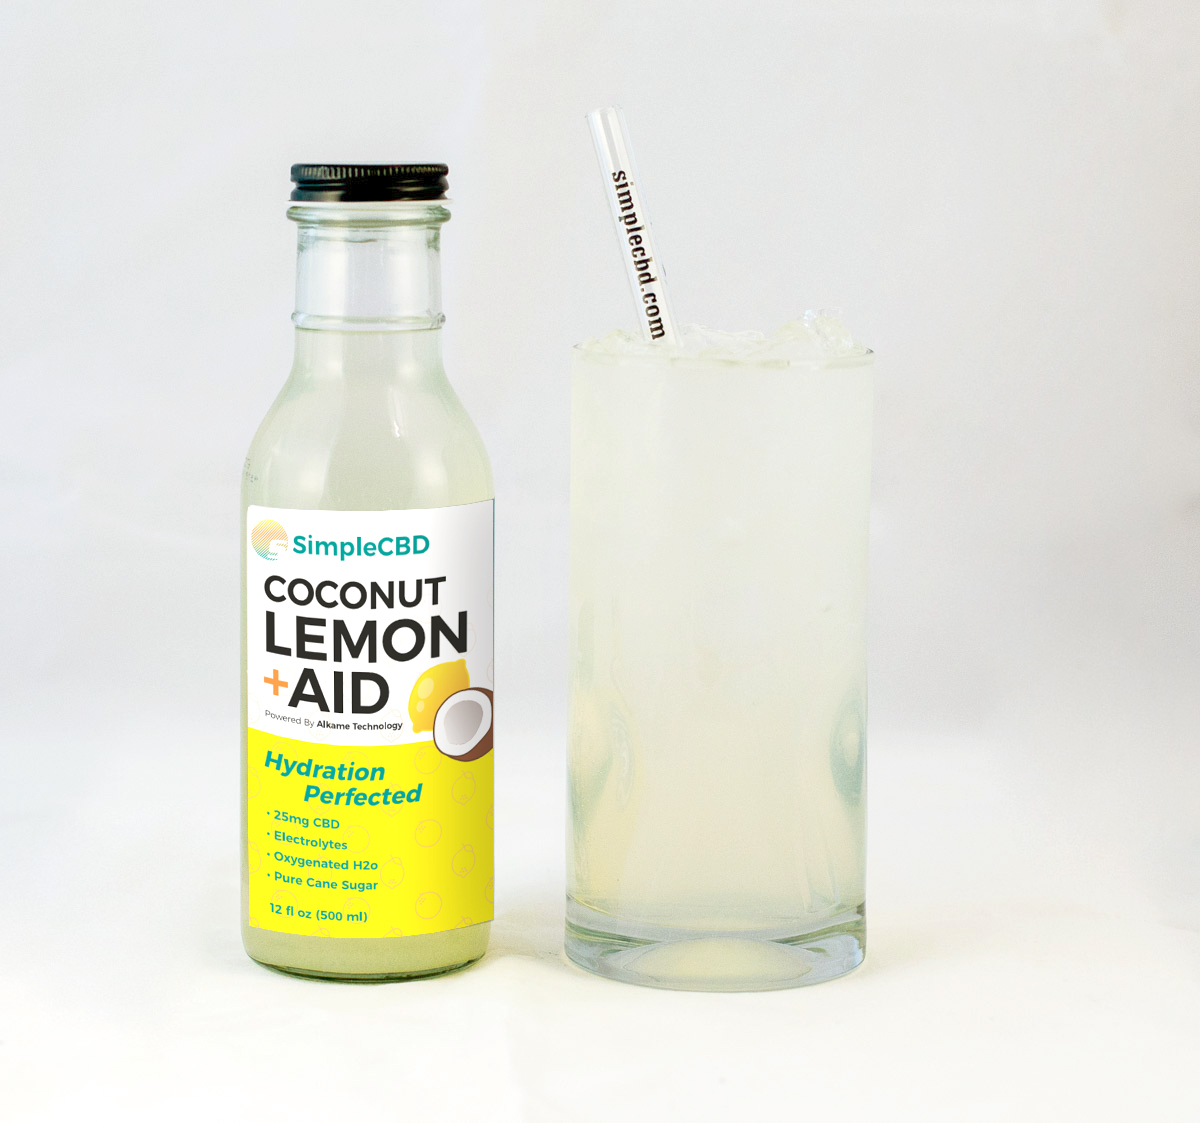 Simple CBD Drinks Lemonade and Ice Tea for retail wholesale available in Oregon Washington Idaho and West Coast